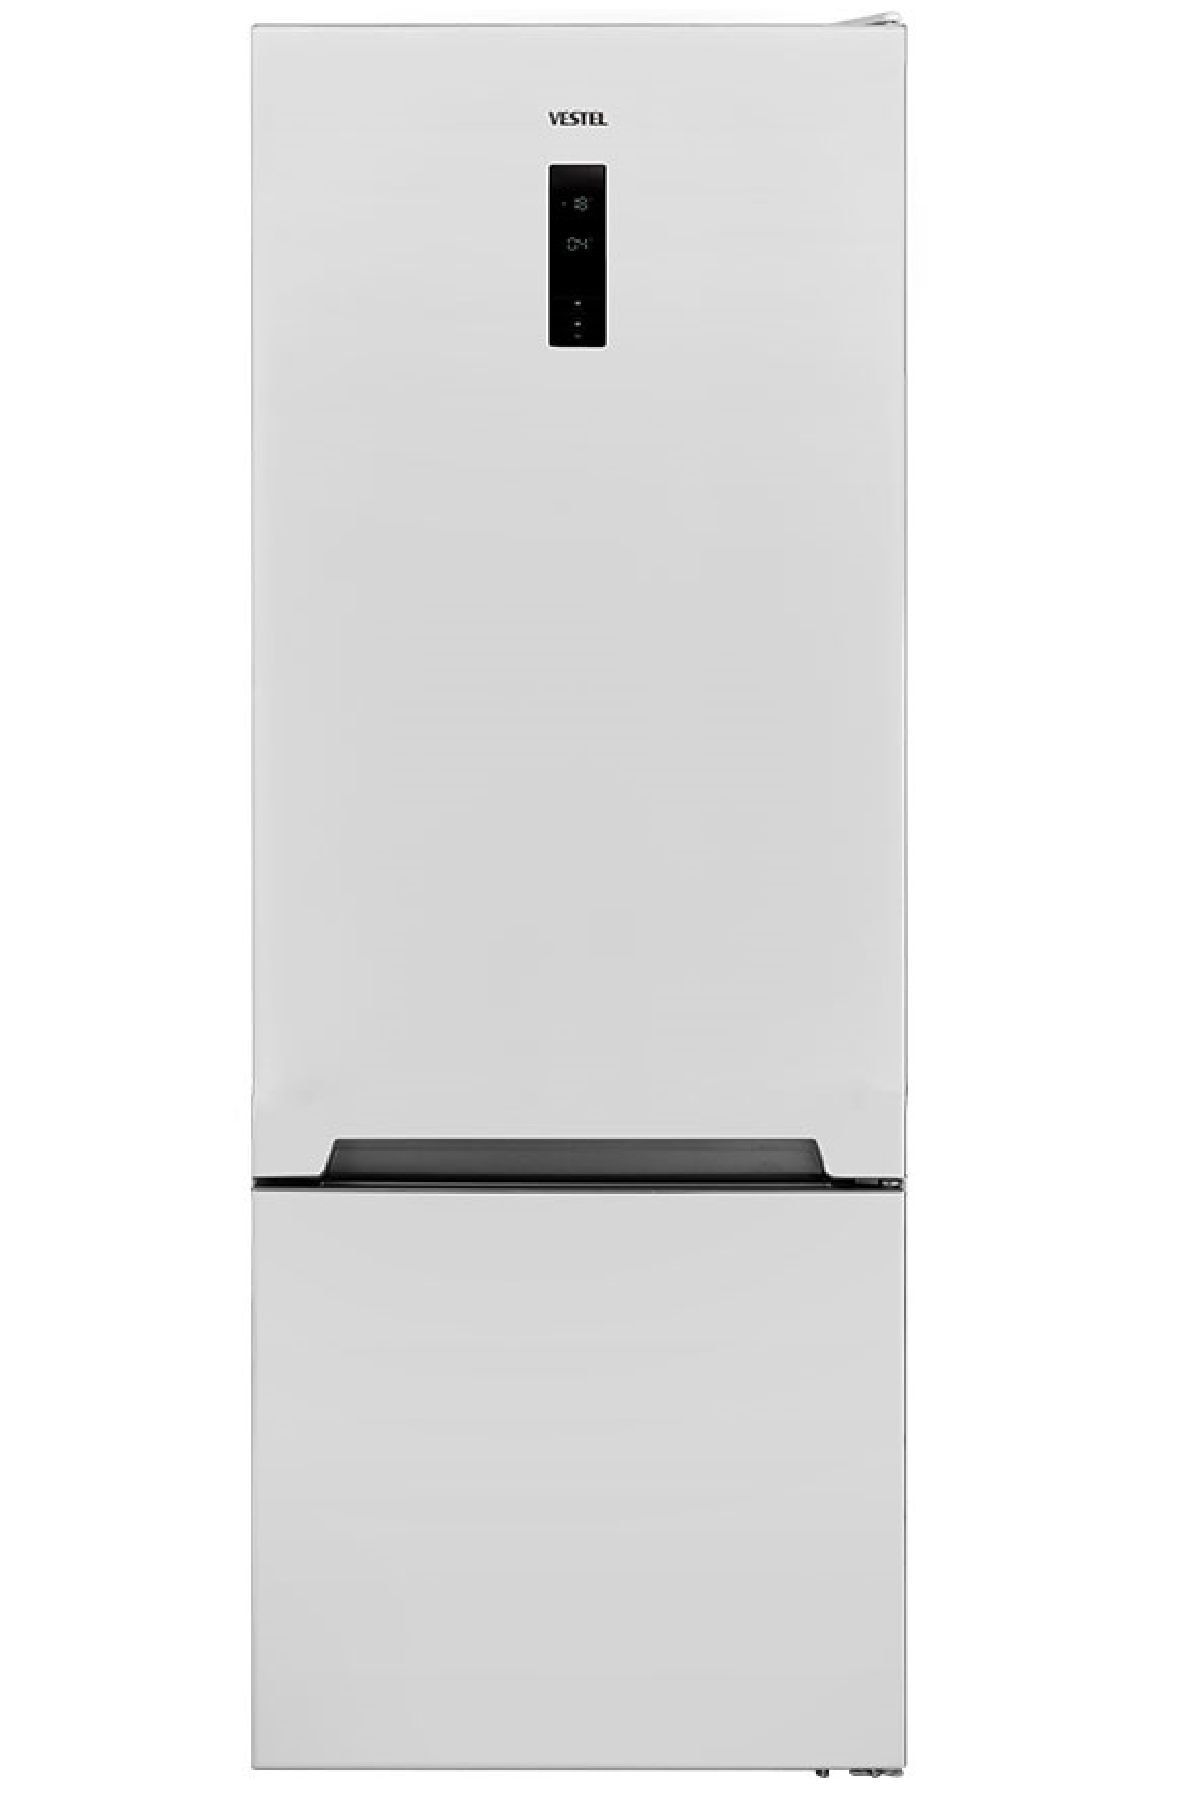 VESTEL NFK5202 E A++ Wifi 520 Lt No-Frost Kombi Buzdolabı